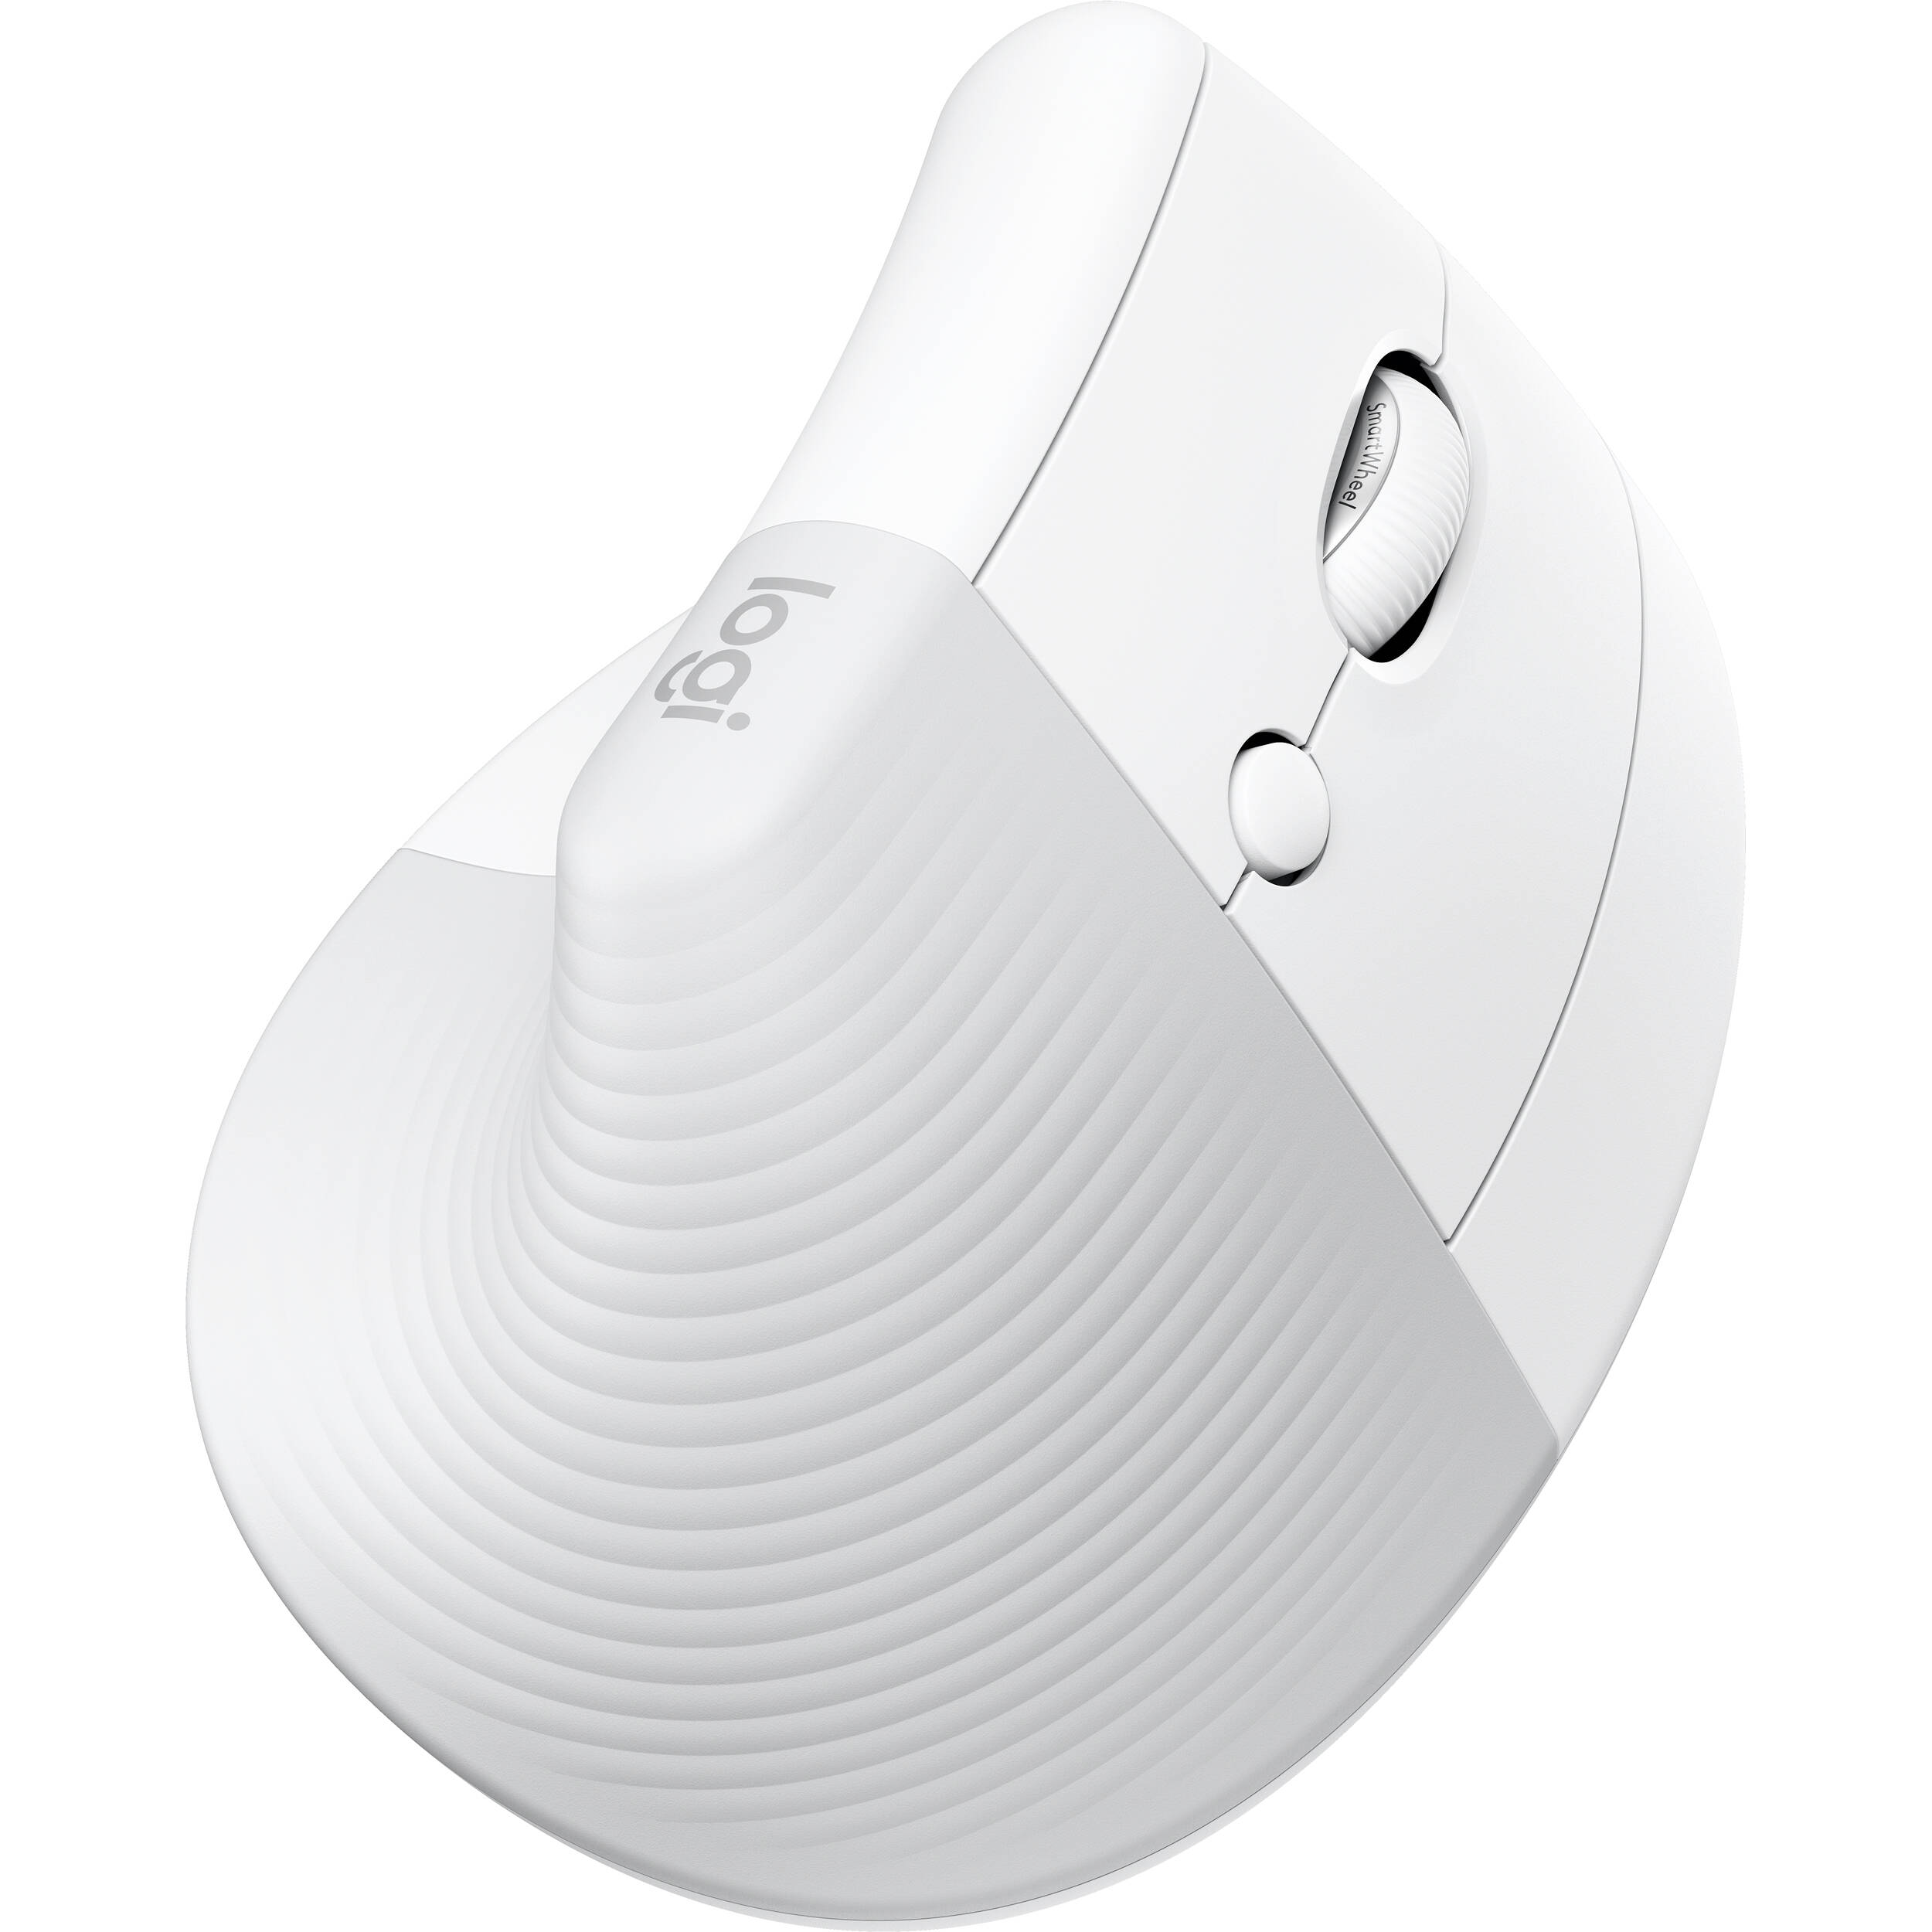 Logitech Lift for Mac Vertical Ergonomic Wireless Mouse- White